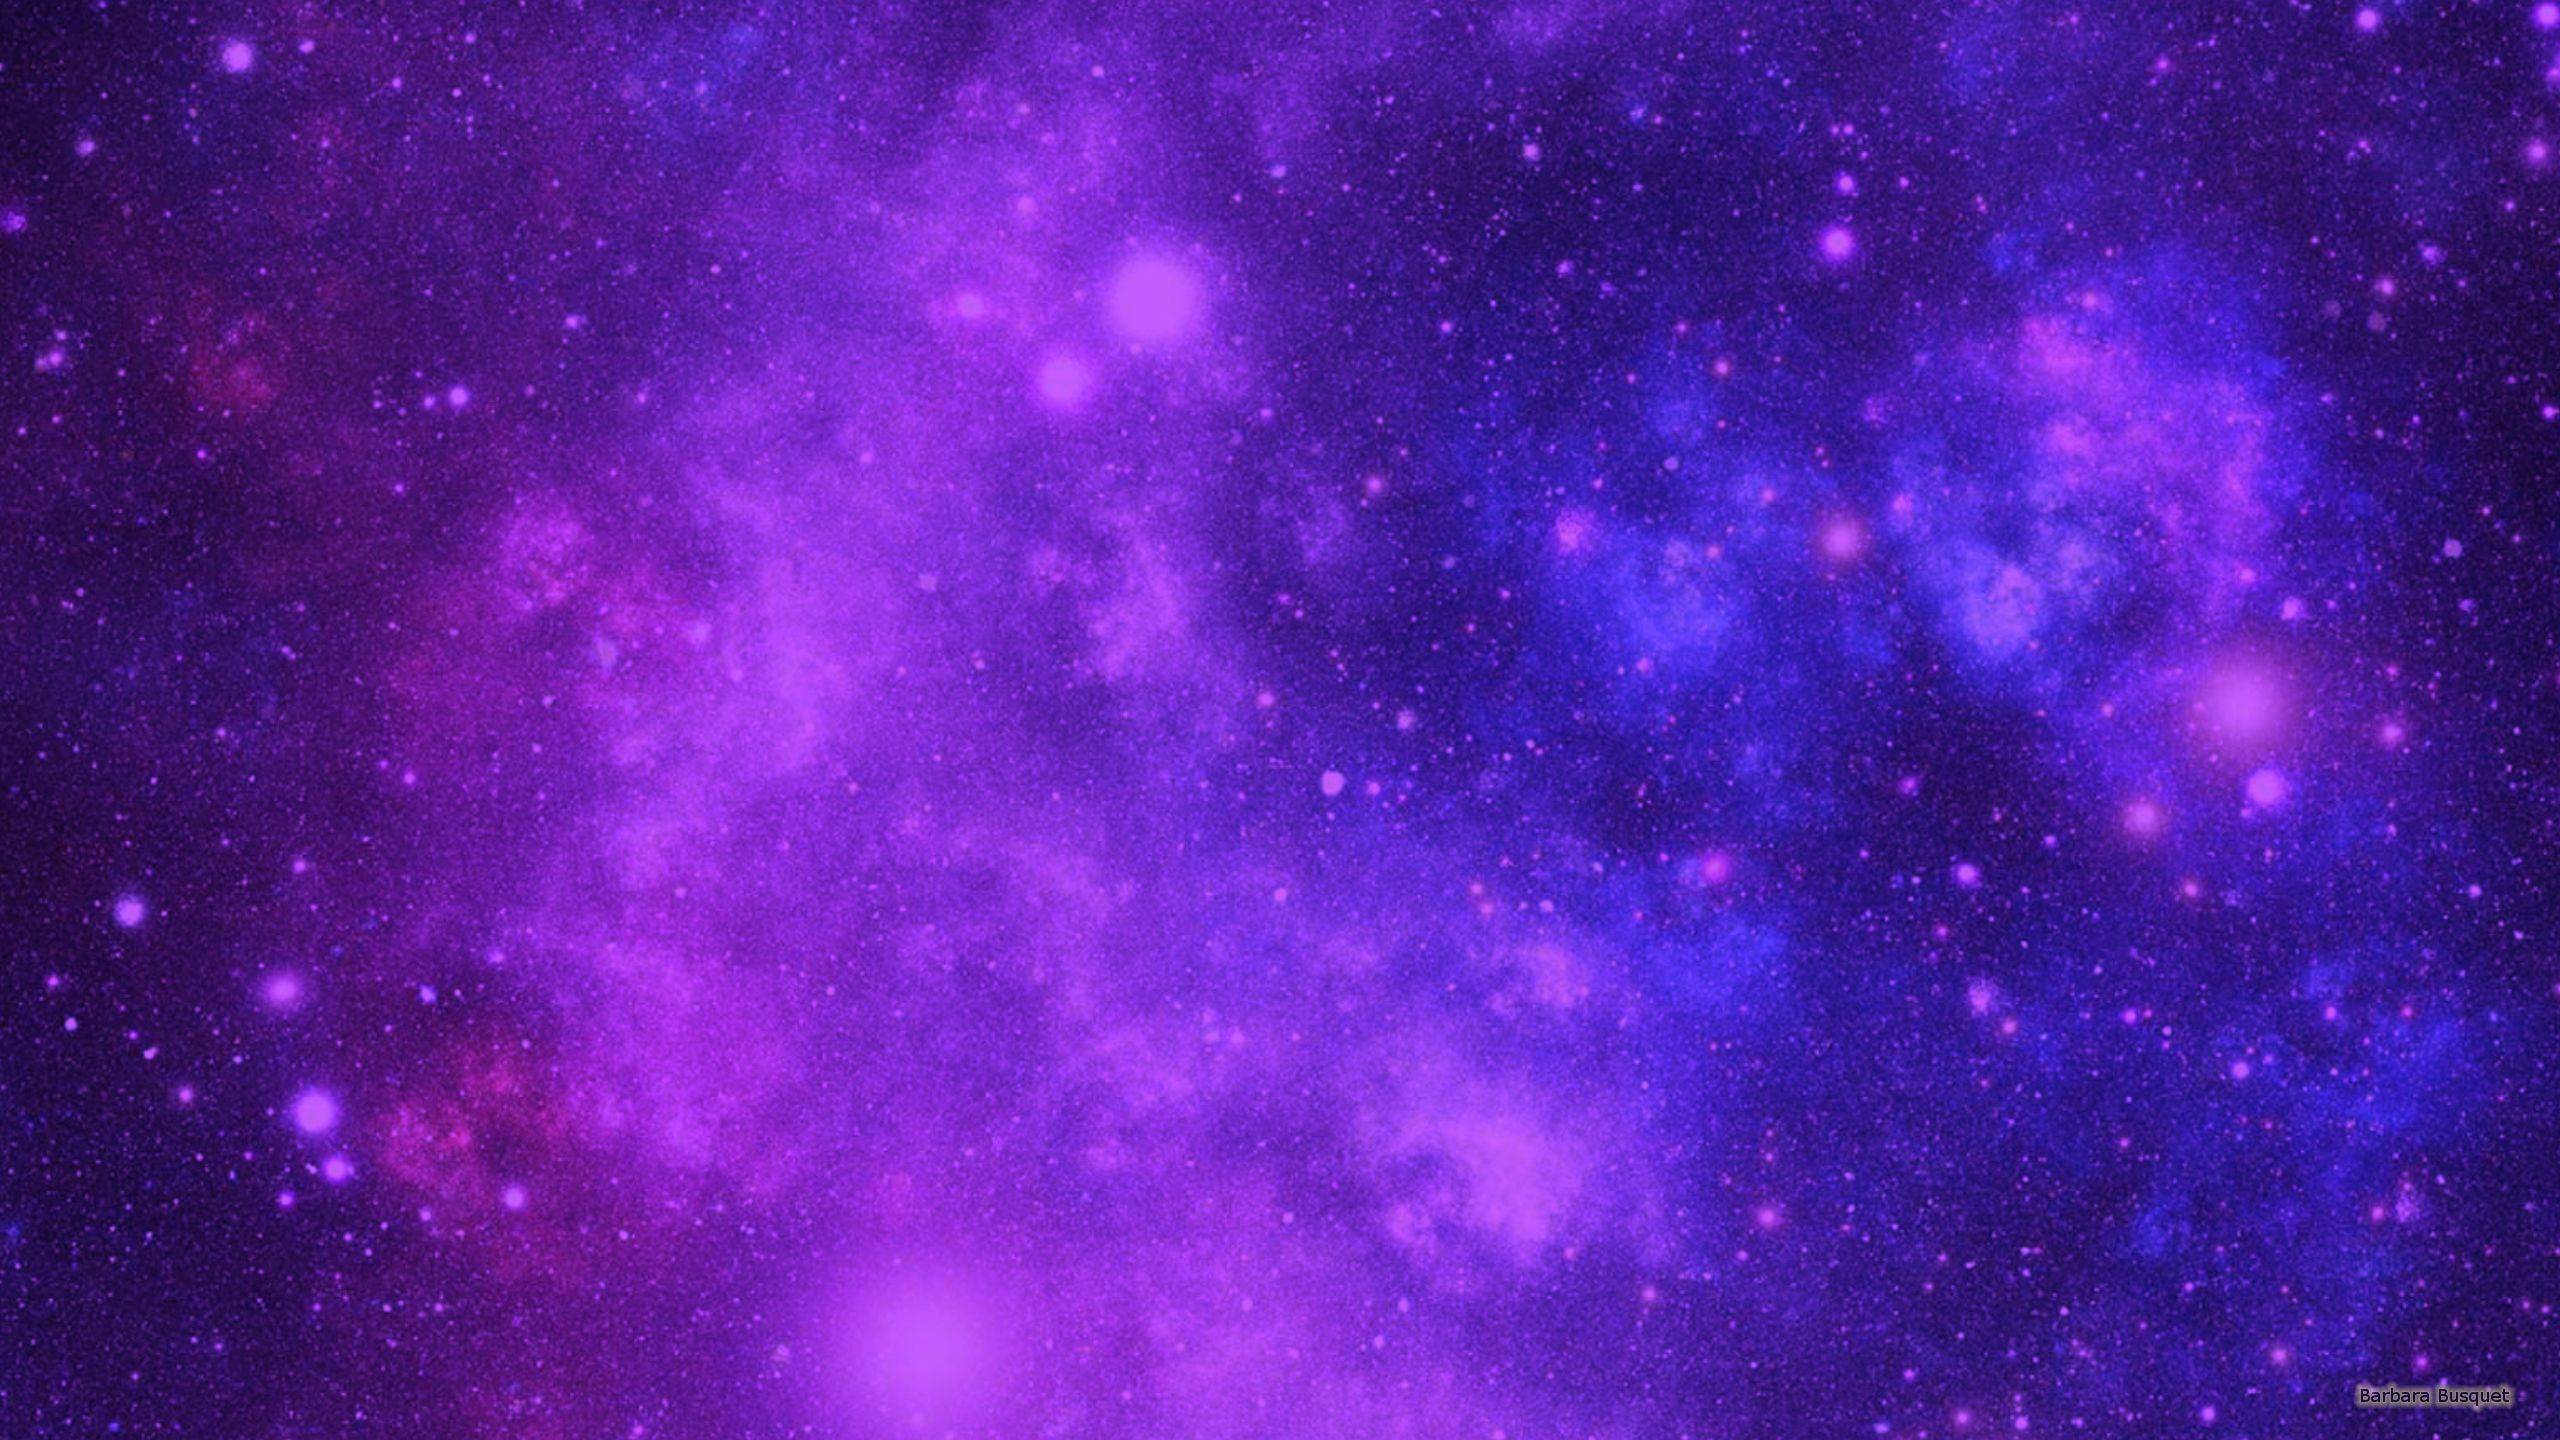 Purple Galaxy Wallpaper For Windows #Nxn. Galaxy wallpaper, Blue galaxy wallpaper, Purple galaxy wallpaper